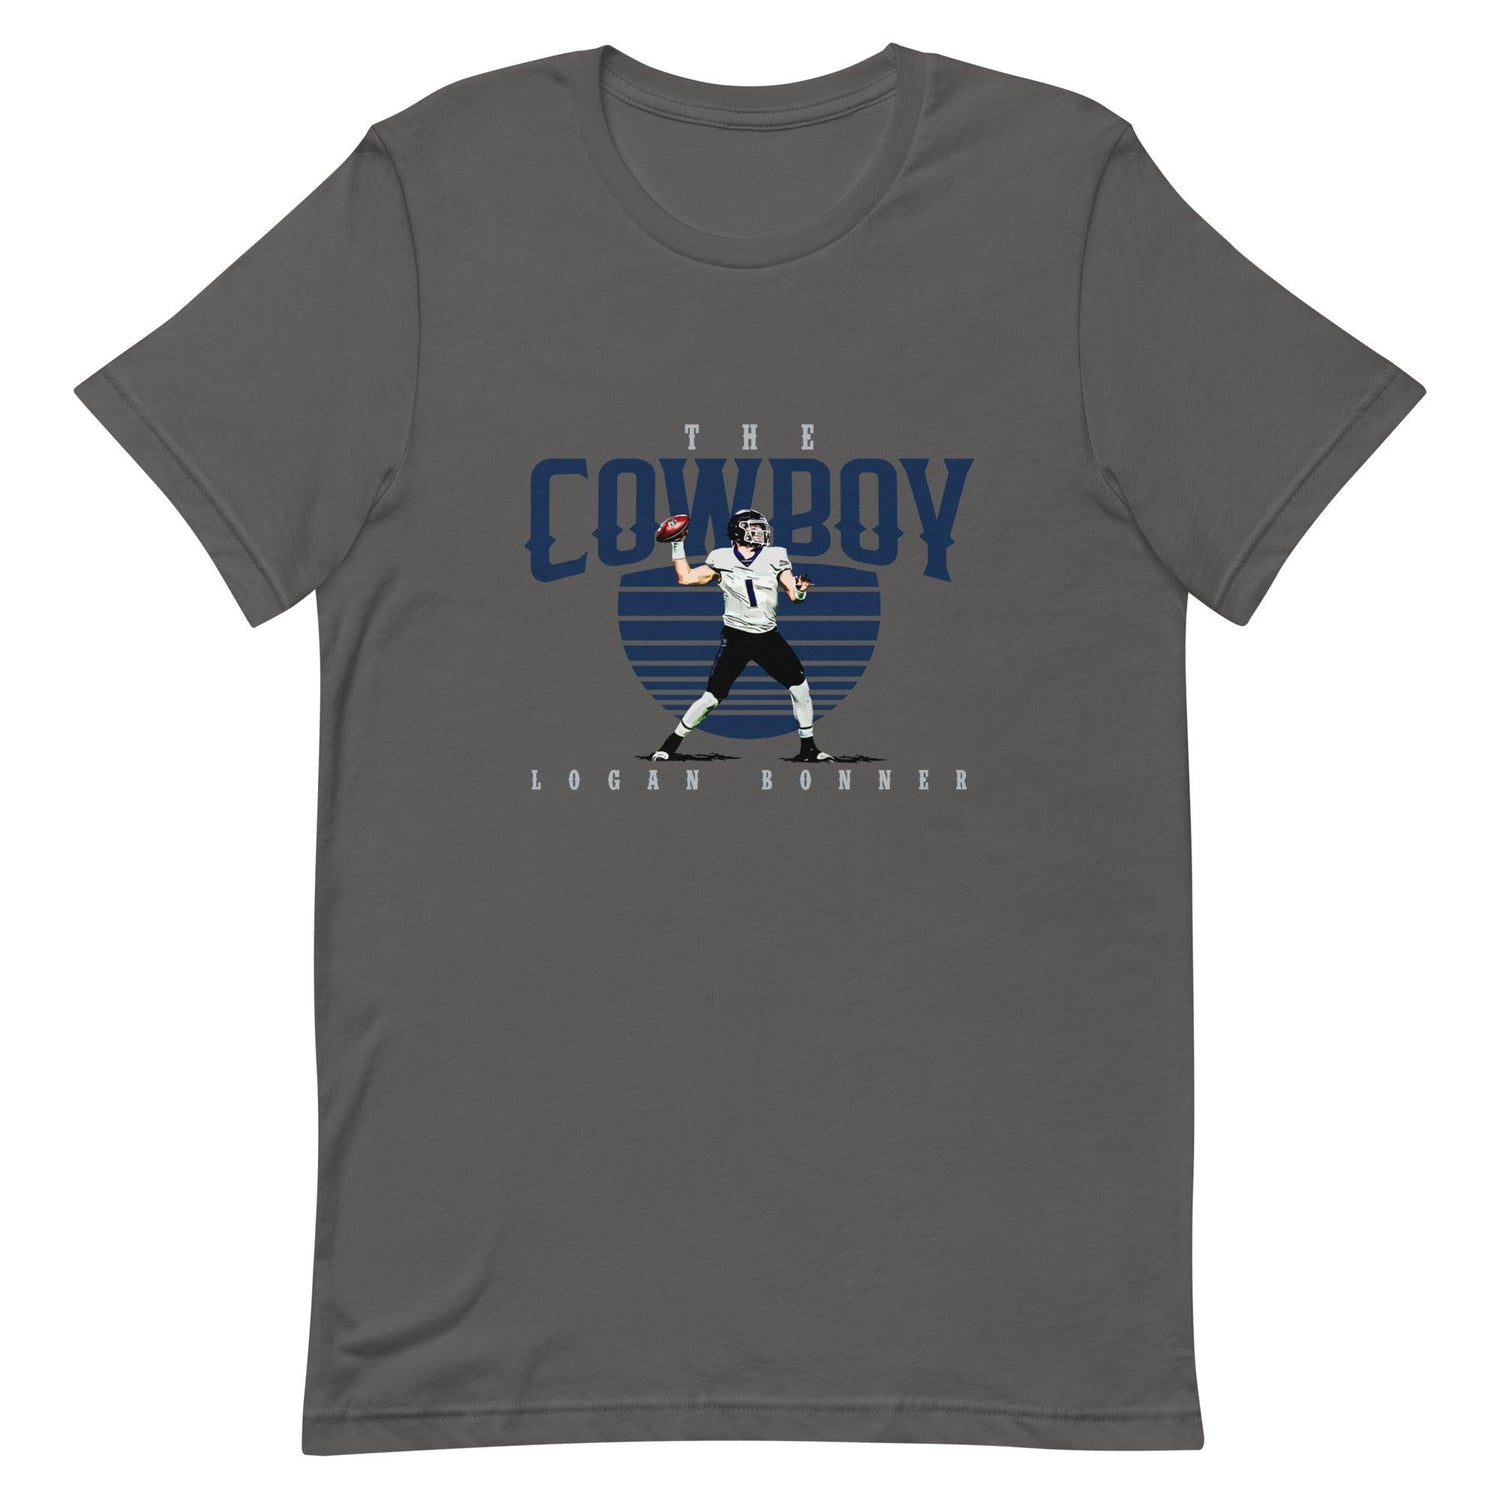 Logan Bonner "The Cowboy" t-shirt - Fan Arch